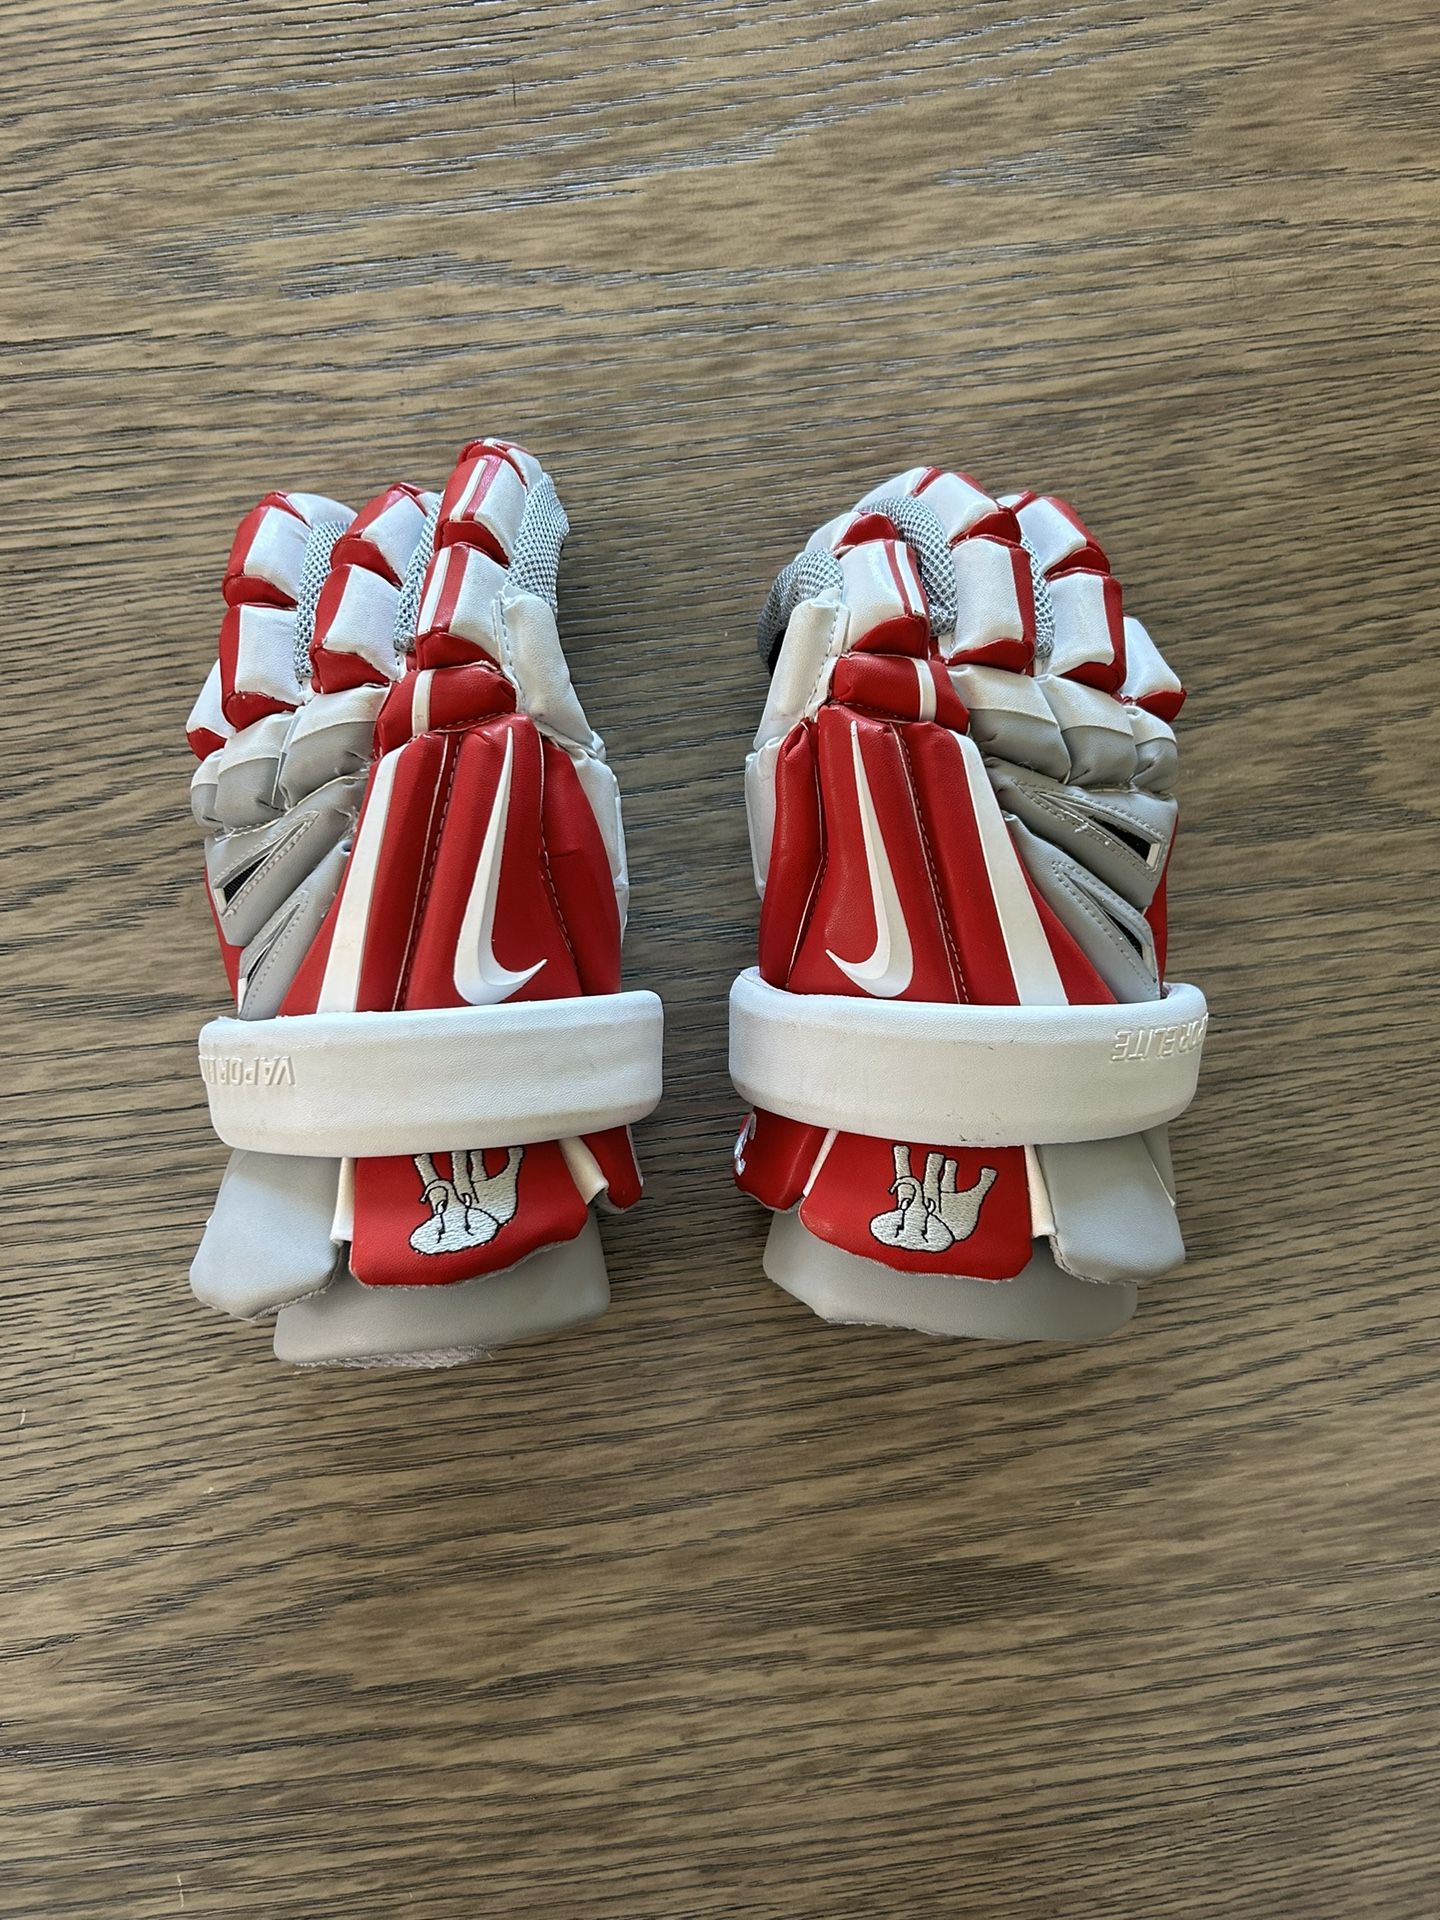 Lacrosse Gloves And Shoulder Pads